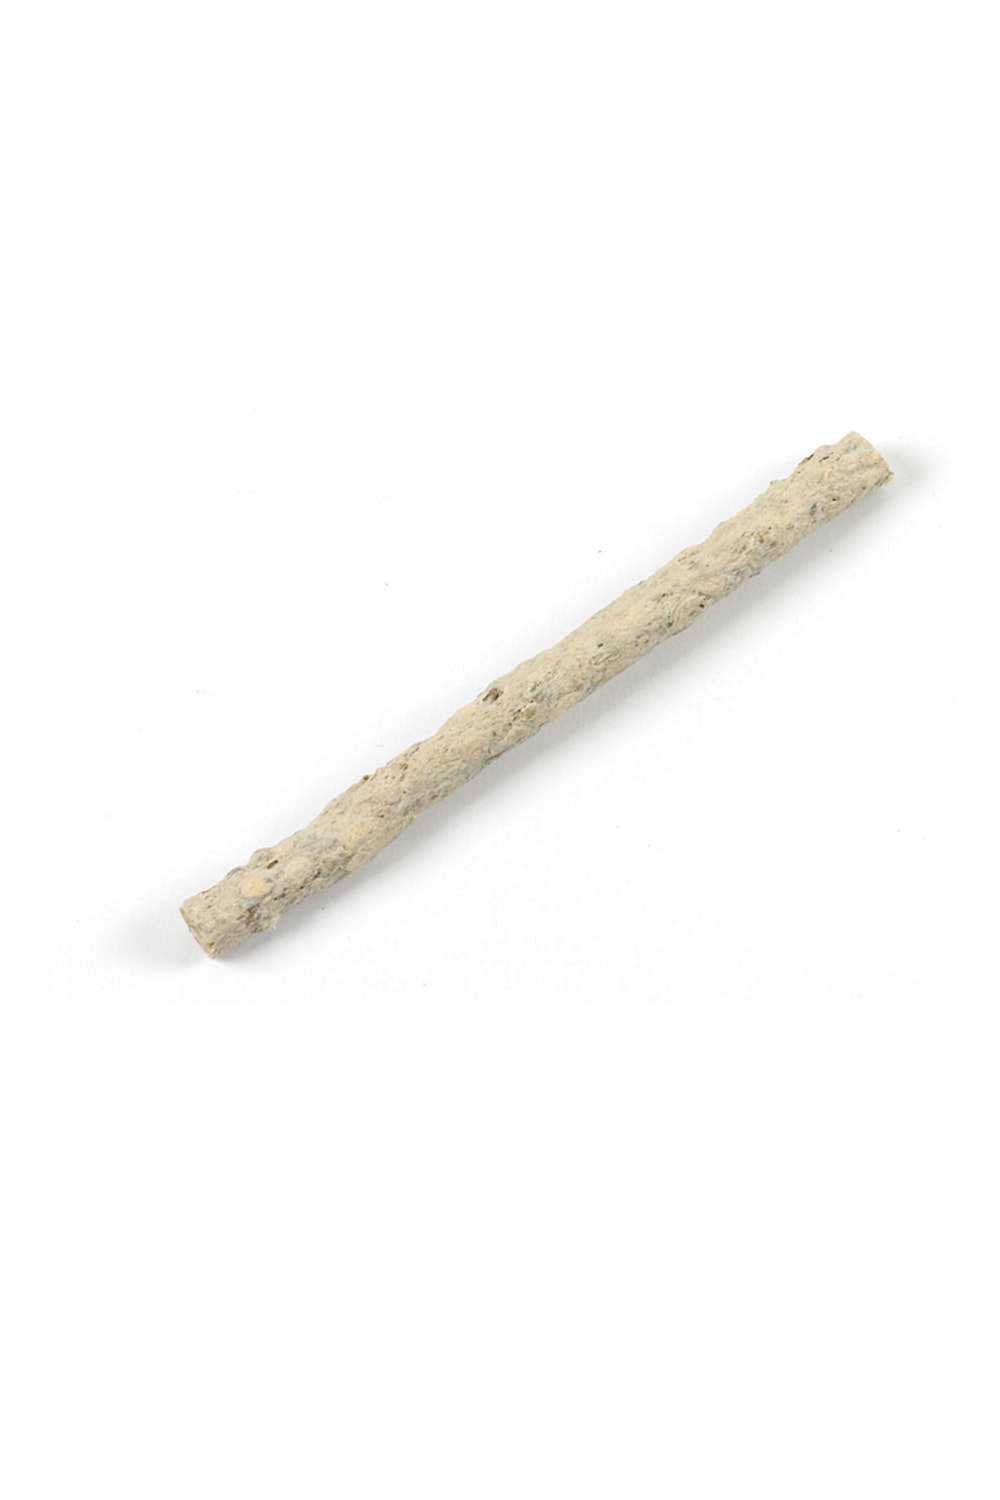 Caldex Classic Fresh Breath Mint Stick Dog Chews (100 Sticks) (May Vary) (5in)